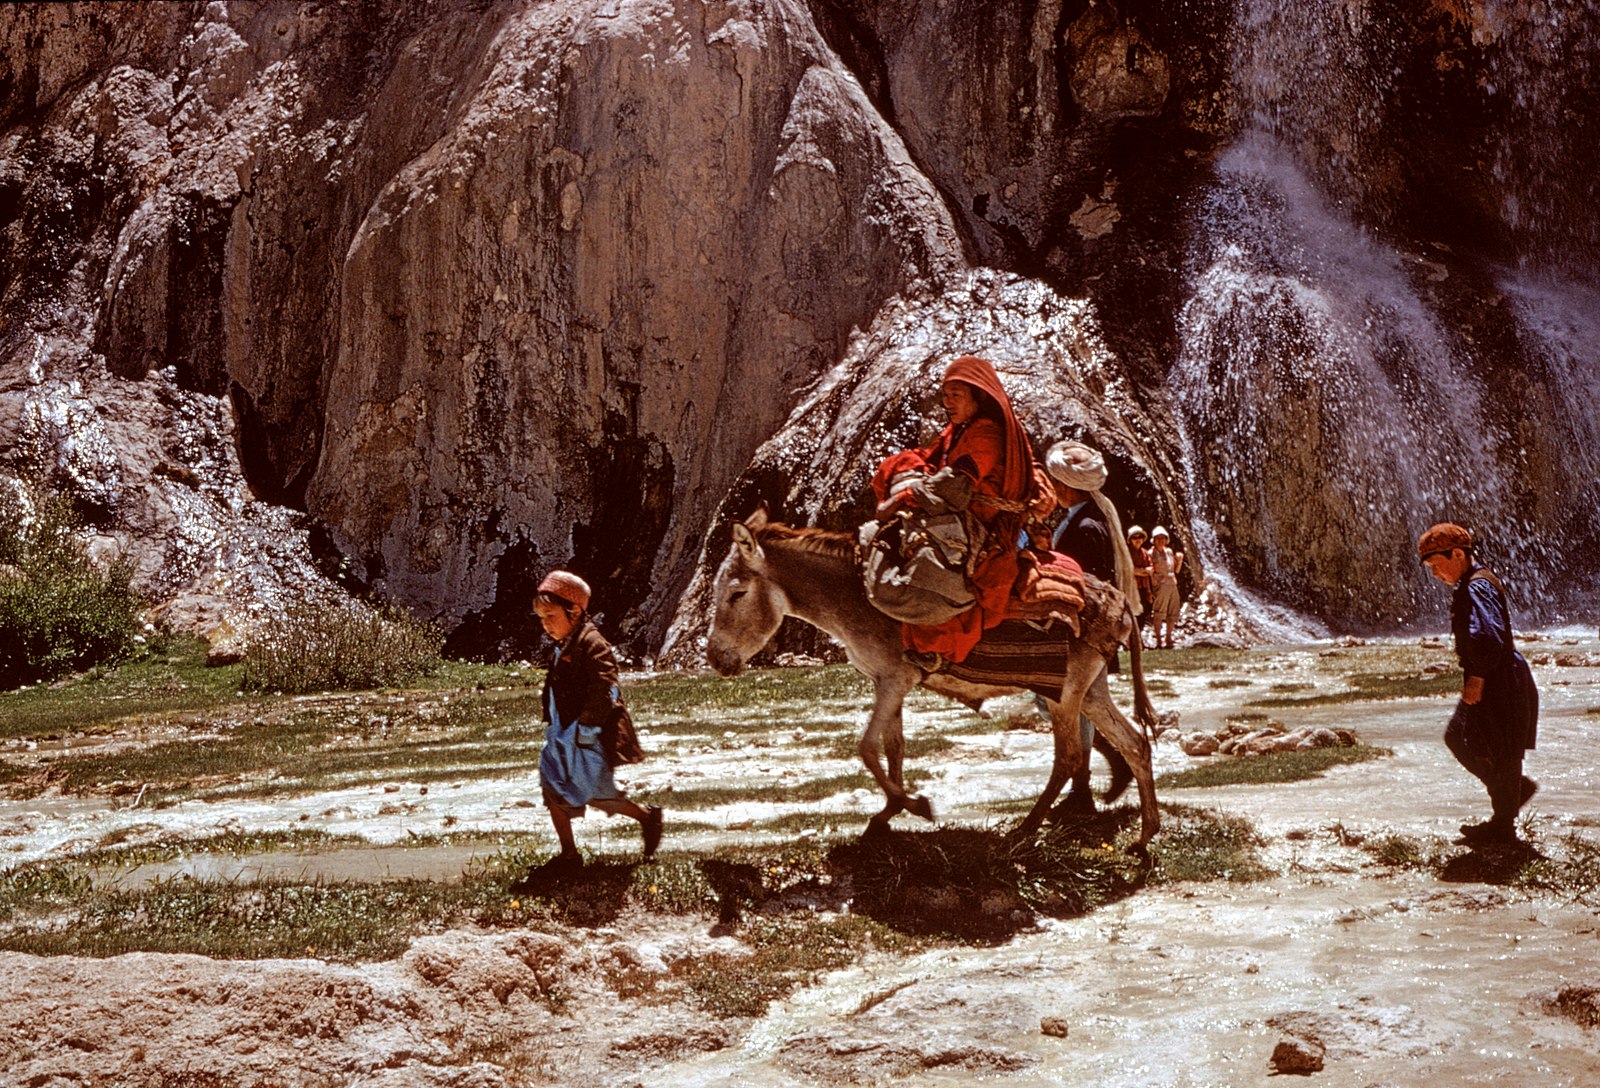 Hazara family, woman and children on donkey back, Band-i-Amir, photo by Françoise Foliot, 1974-1975, Creative Commons Attribution-Share Alike 4.0 International license